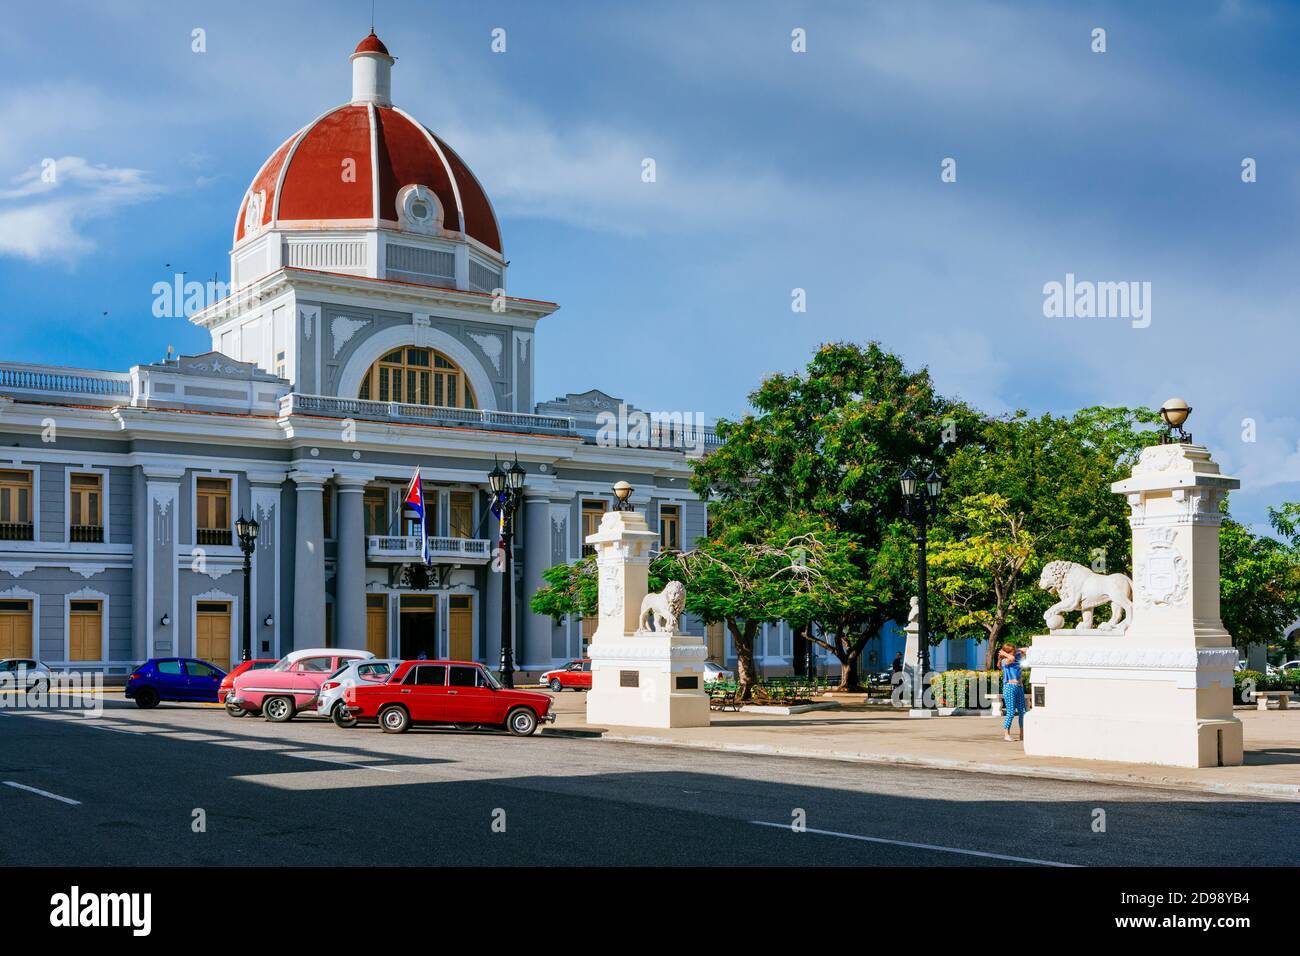 Palacio de Gobierno - Government Palace - City Hall and Provincial Museum near Medici Lions, Cienfuegos, Cuba, Latin America and the Caribbean Stock Photo